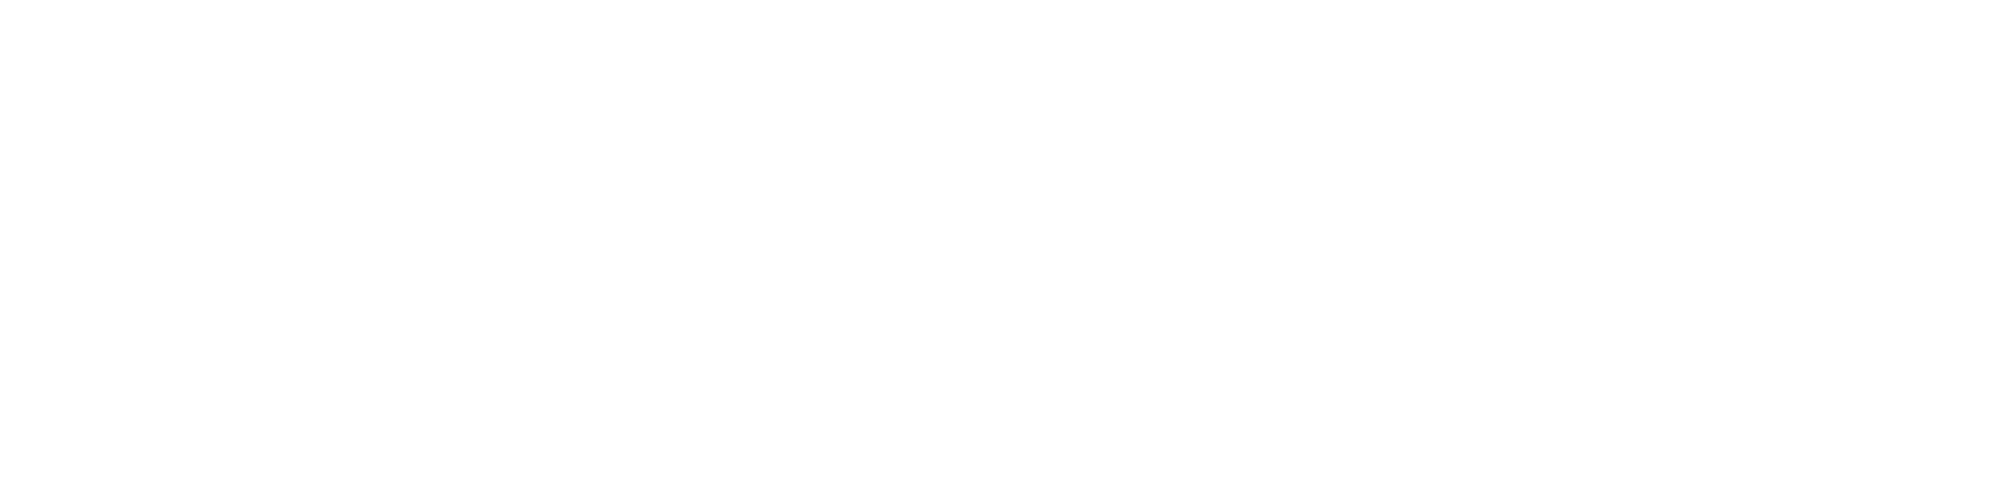 JobHunt Logo